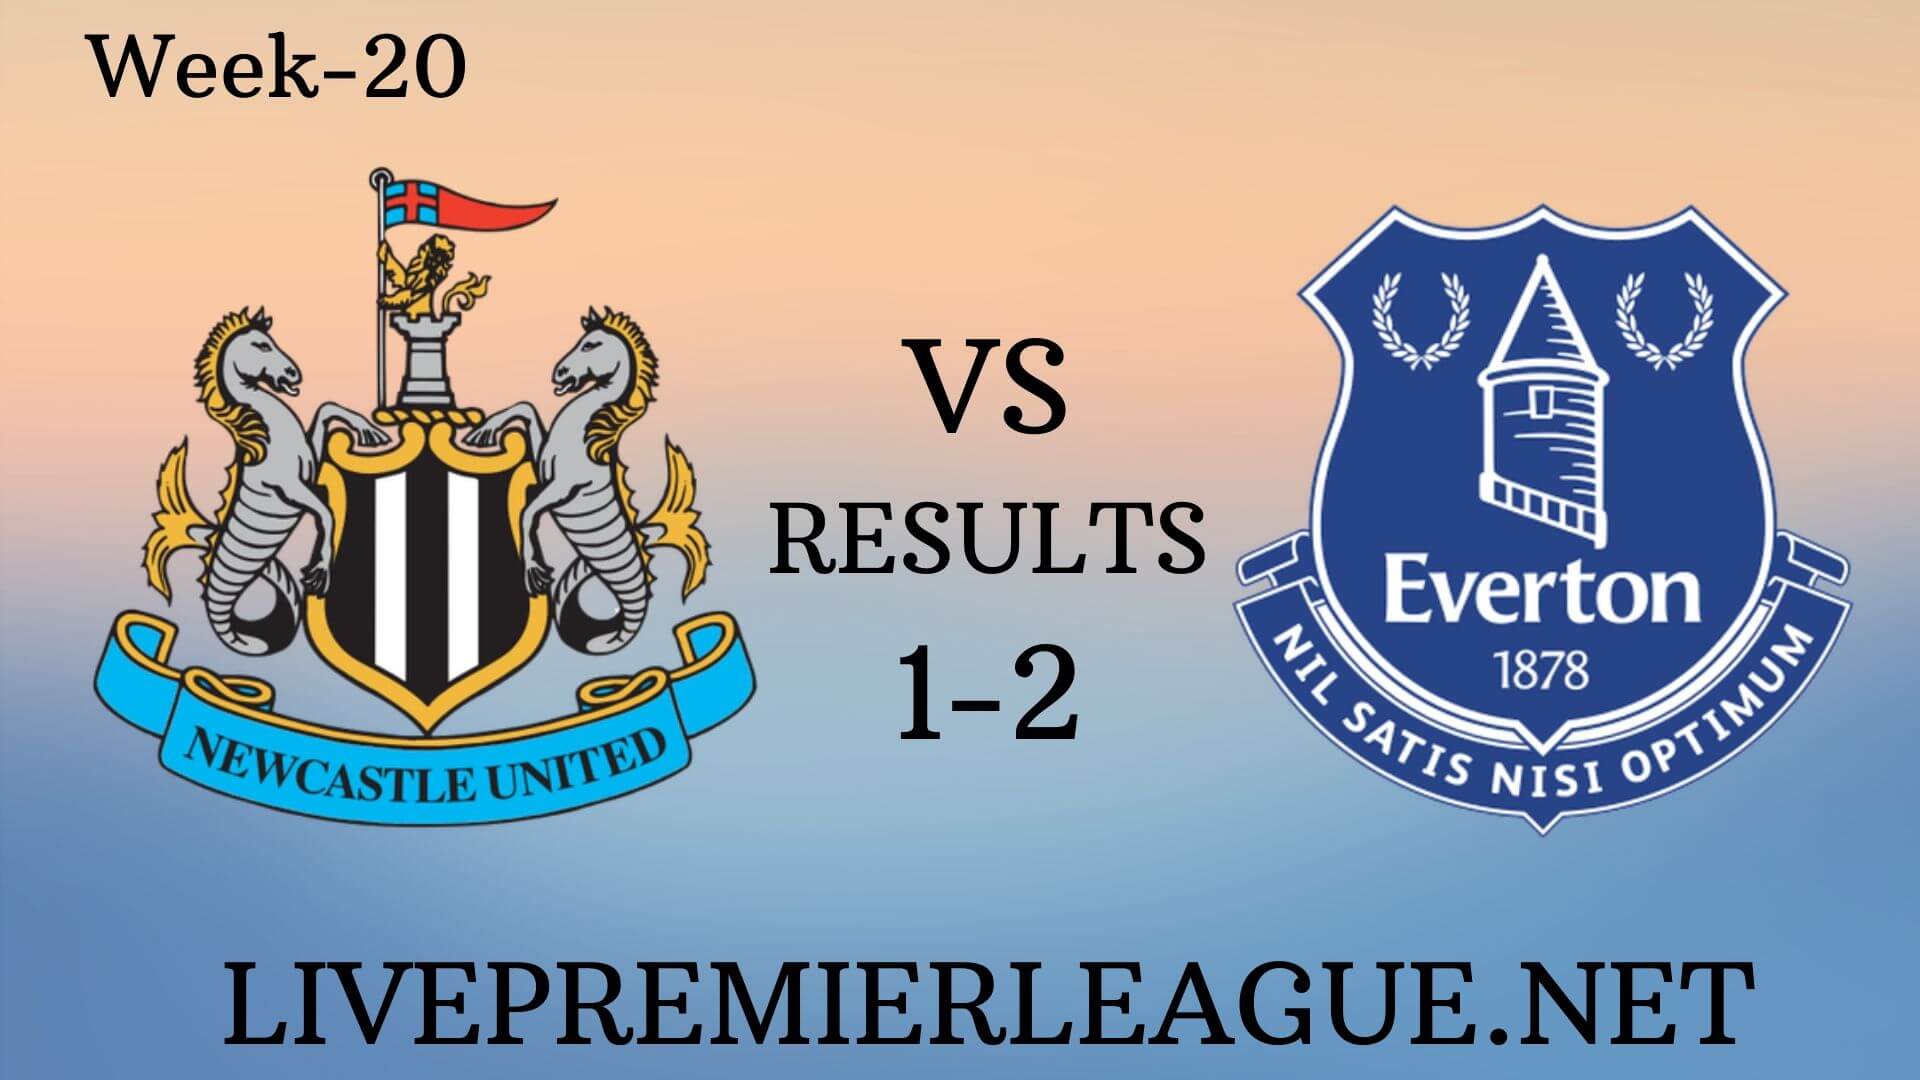 Newcastle United Vs Everton | Week 20 Results 2019